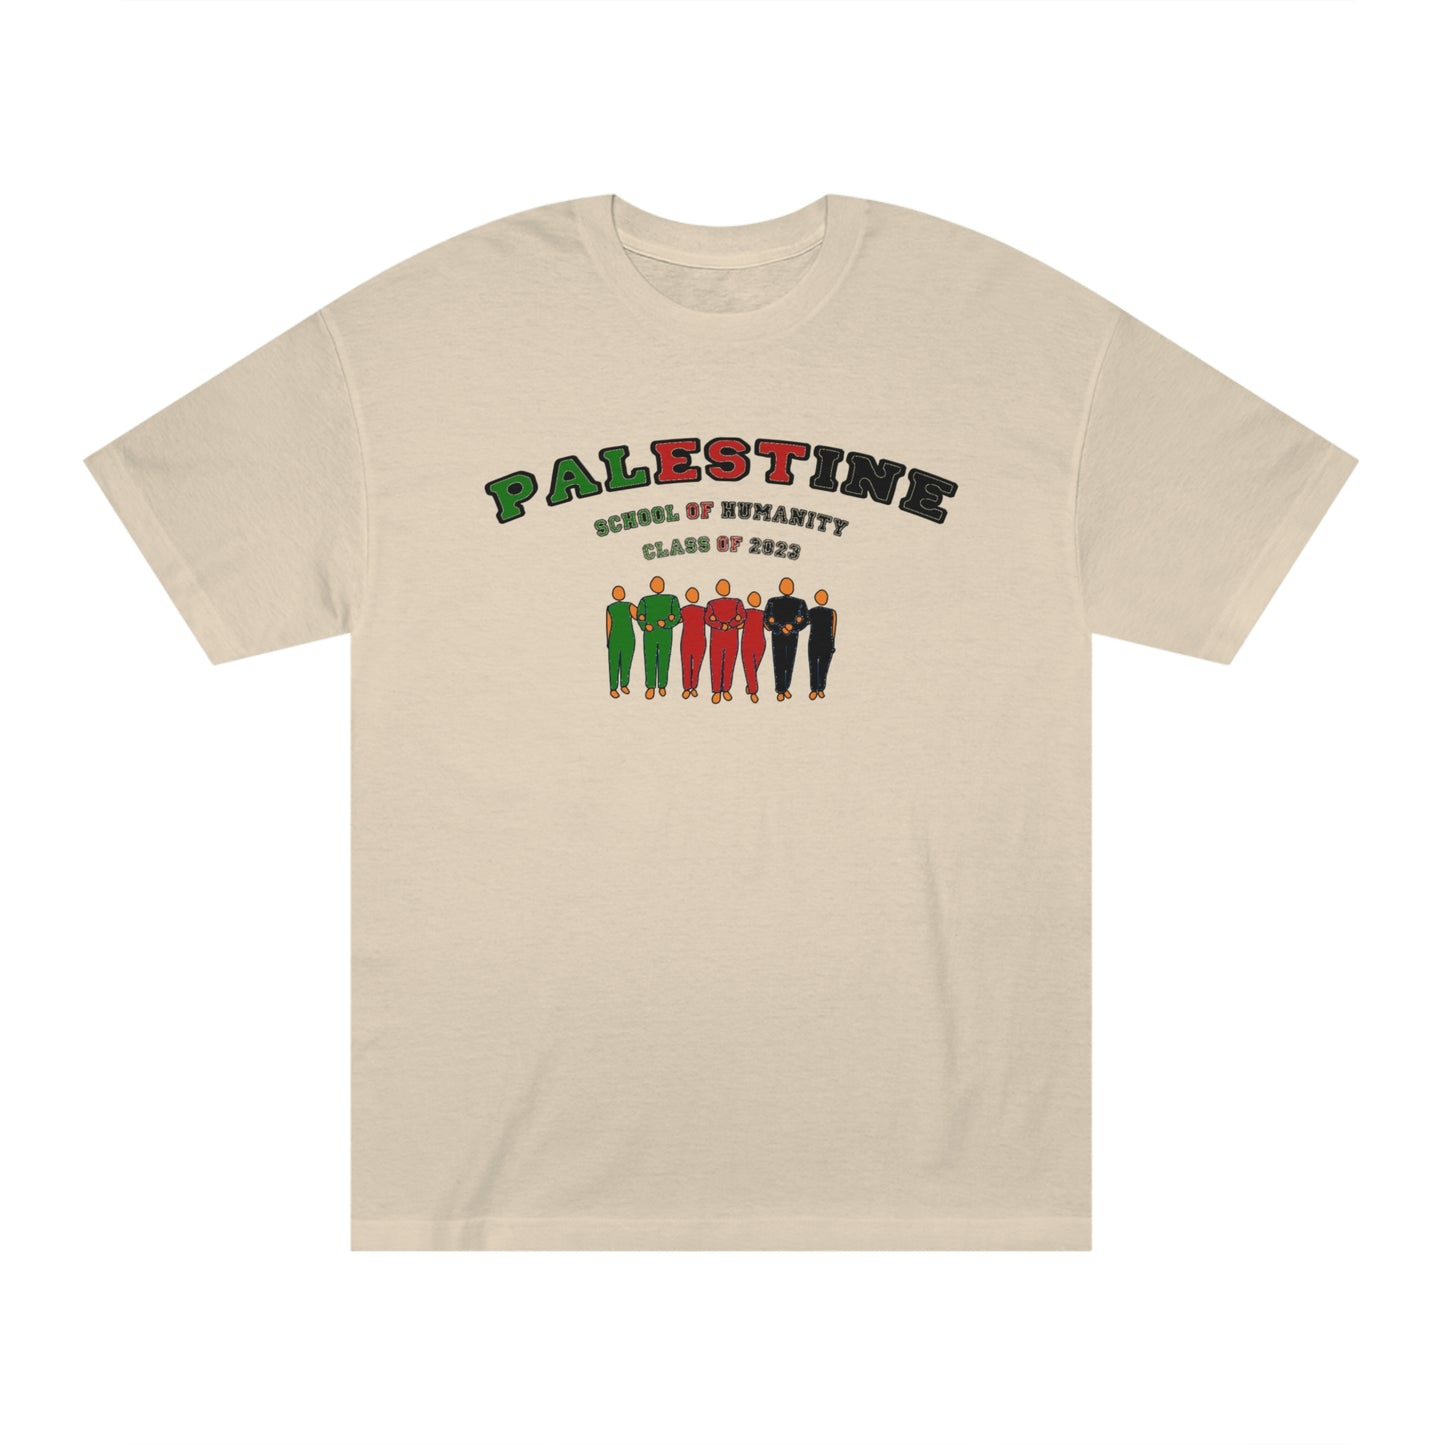 Palestine : School of Humanity